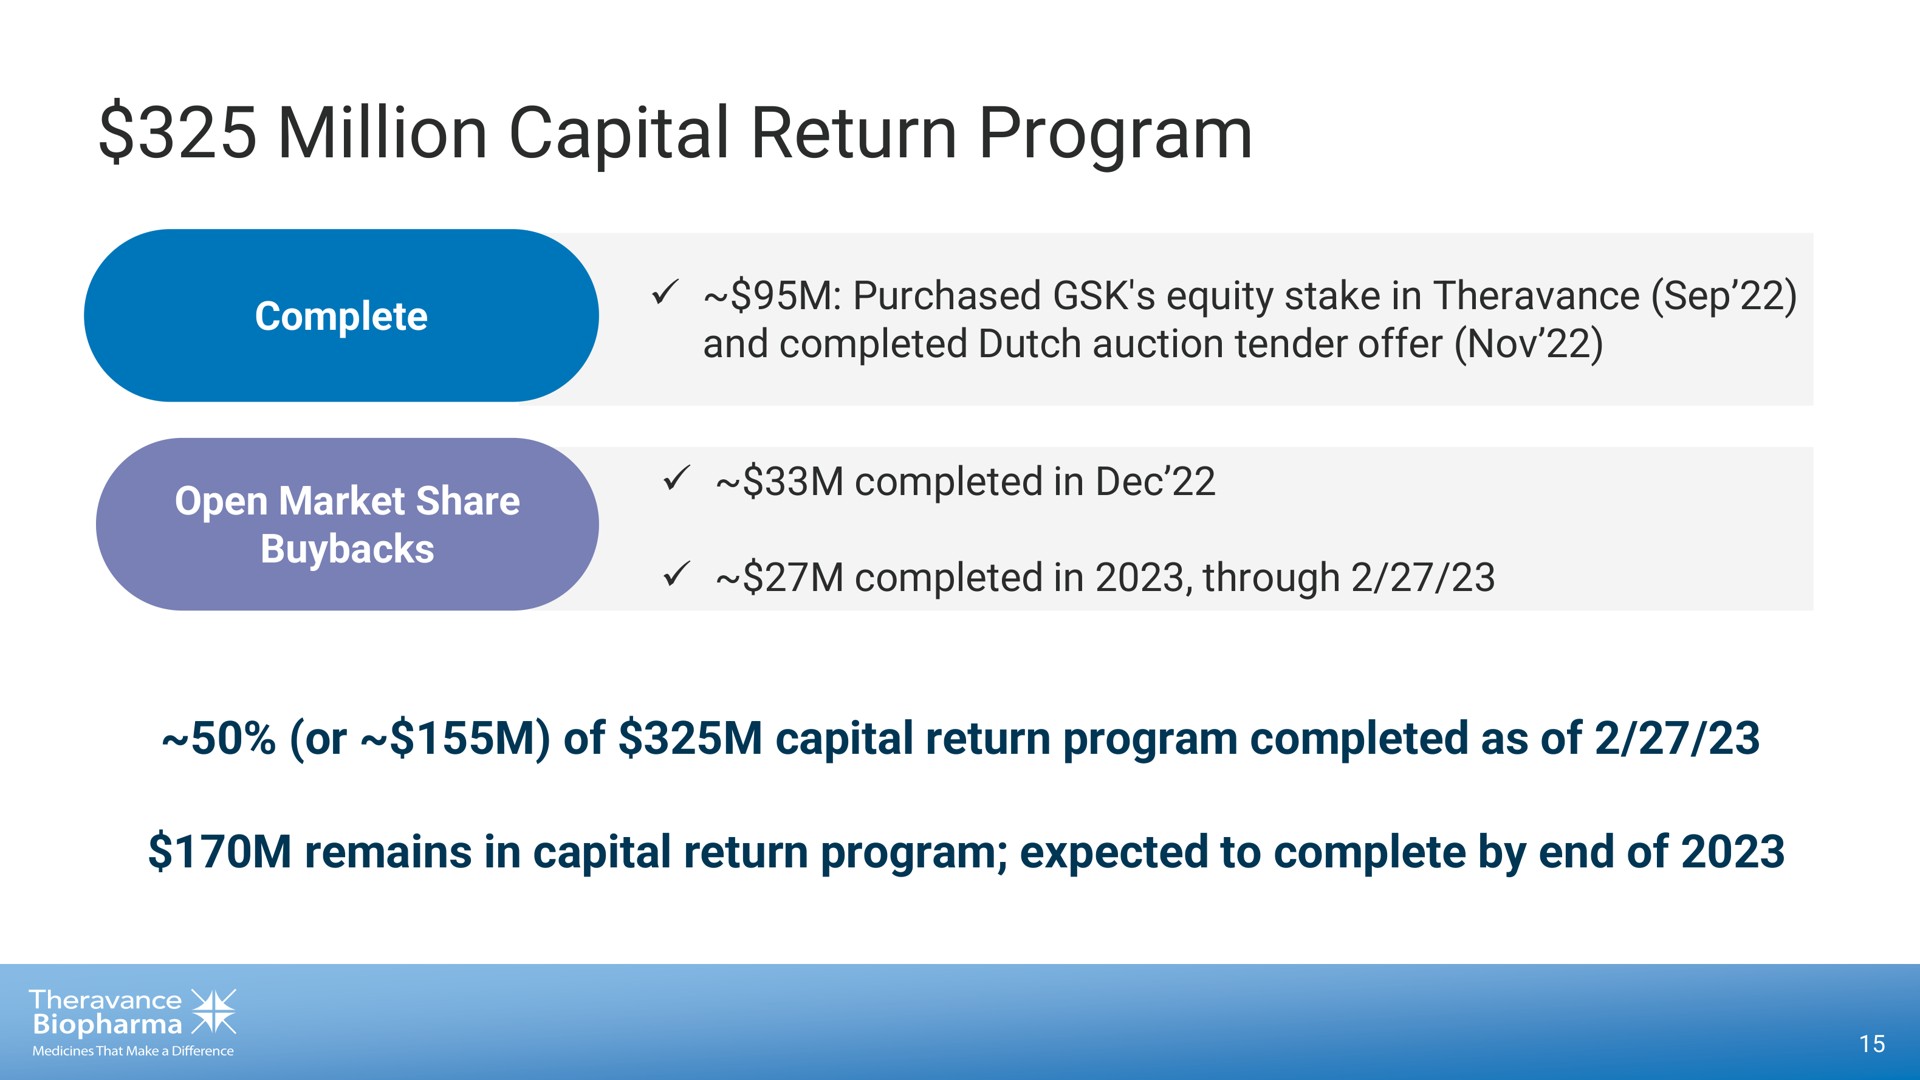 million capital return program | Theravance Biopharma